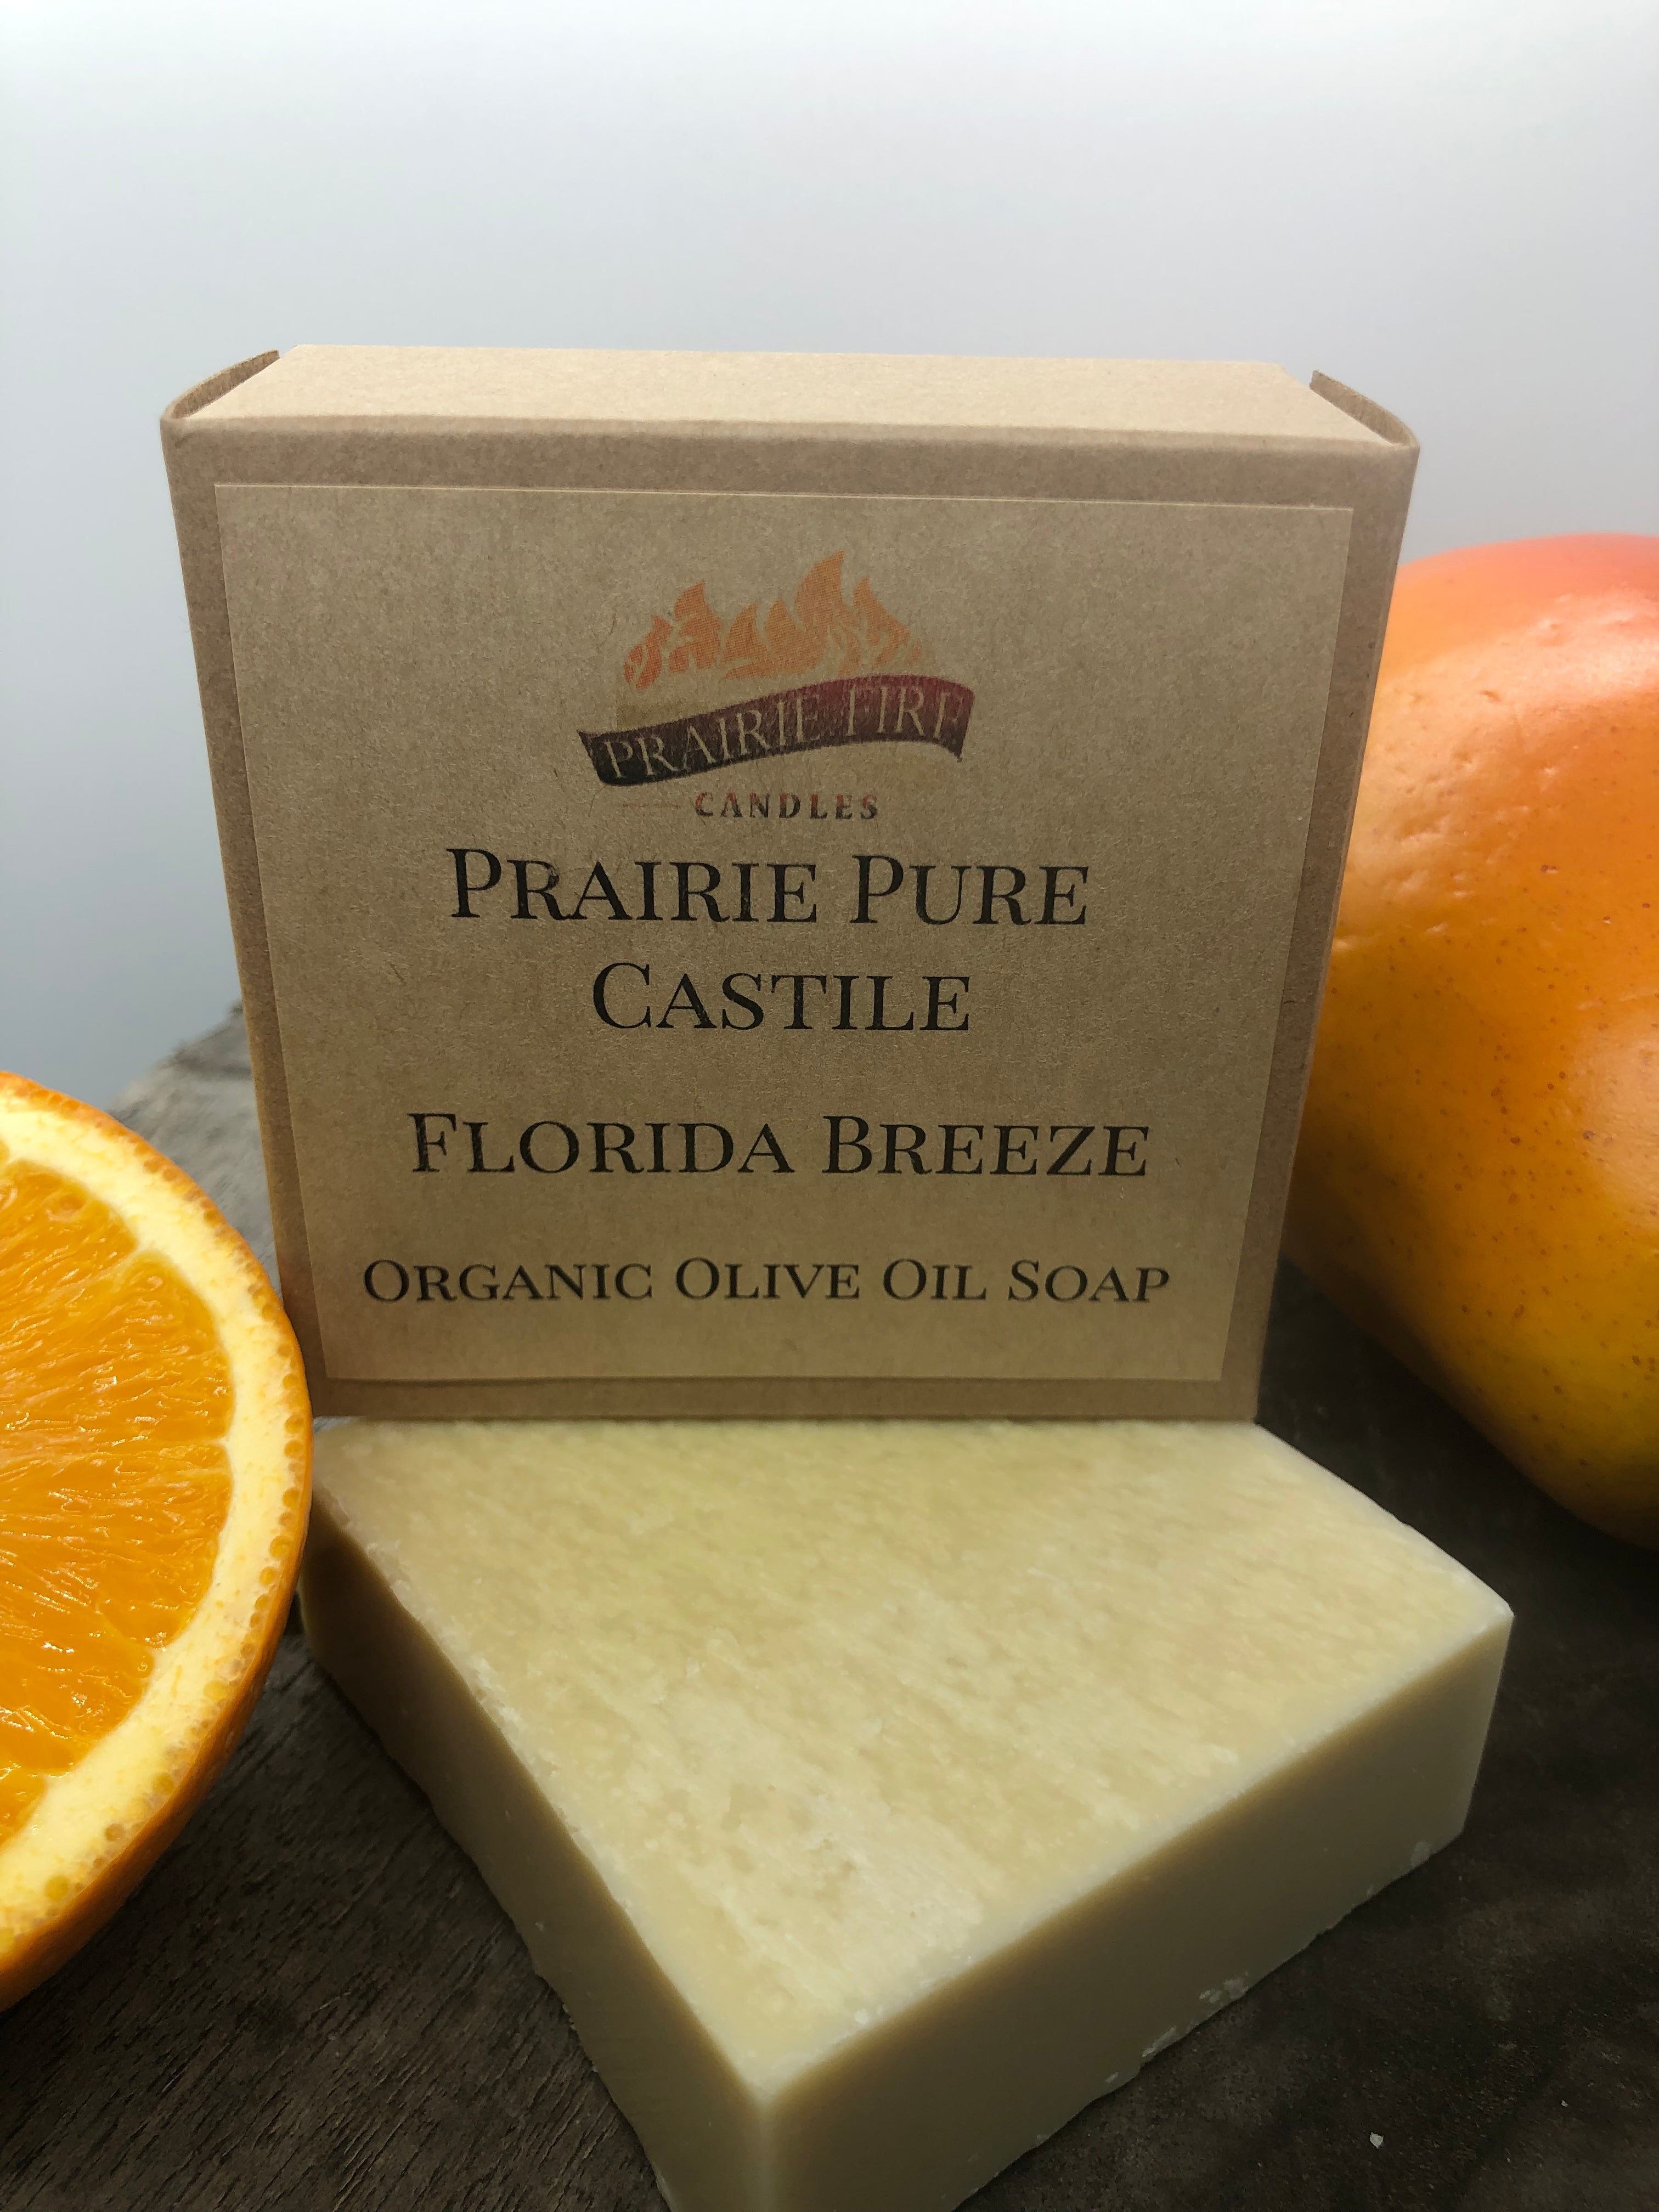 Florida Breeze Real Castile Organic Olive Oil Soap for Sensitive Skin - Dye Free - 100% Certified Organic Extra Virgin Olive Oil-0